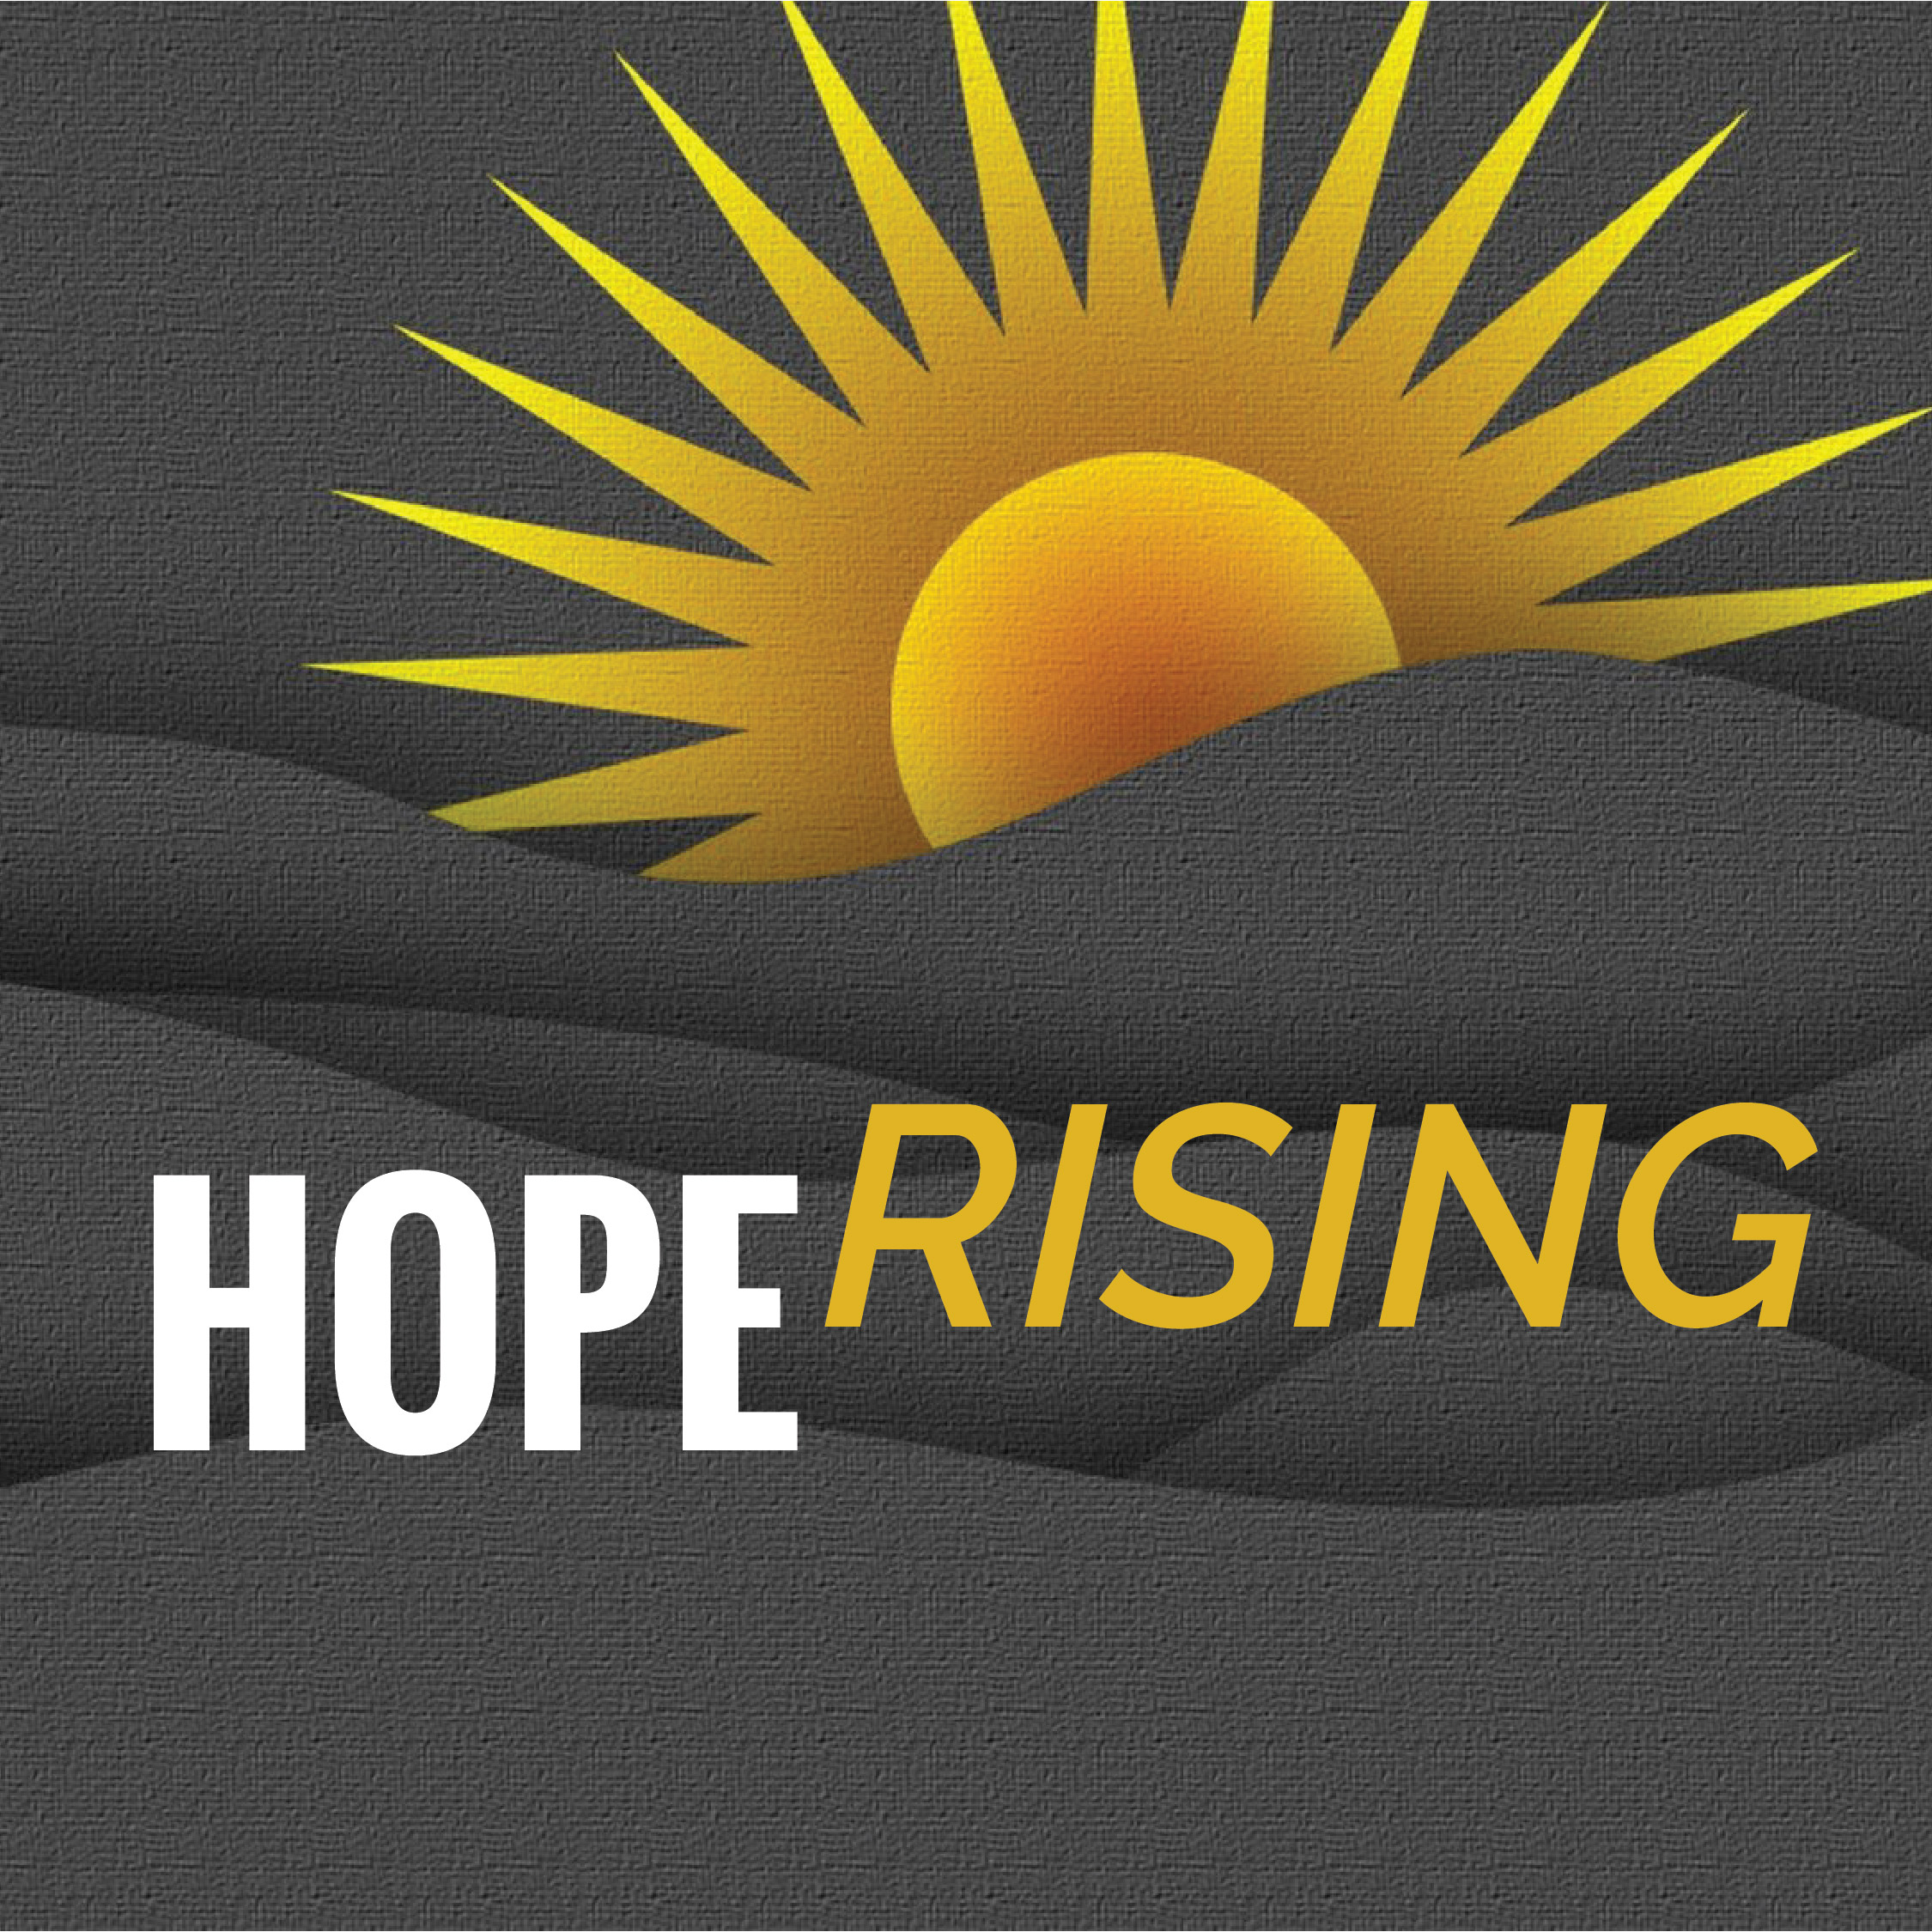 Hope Rising: Hope is Real